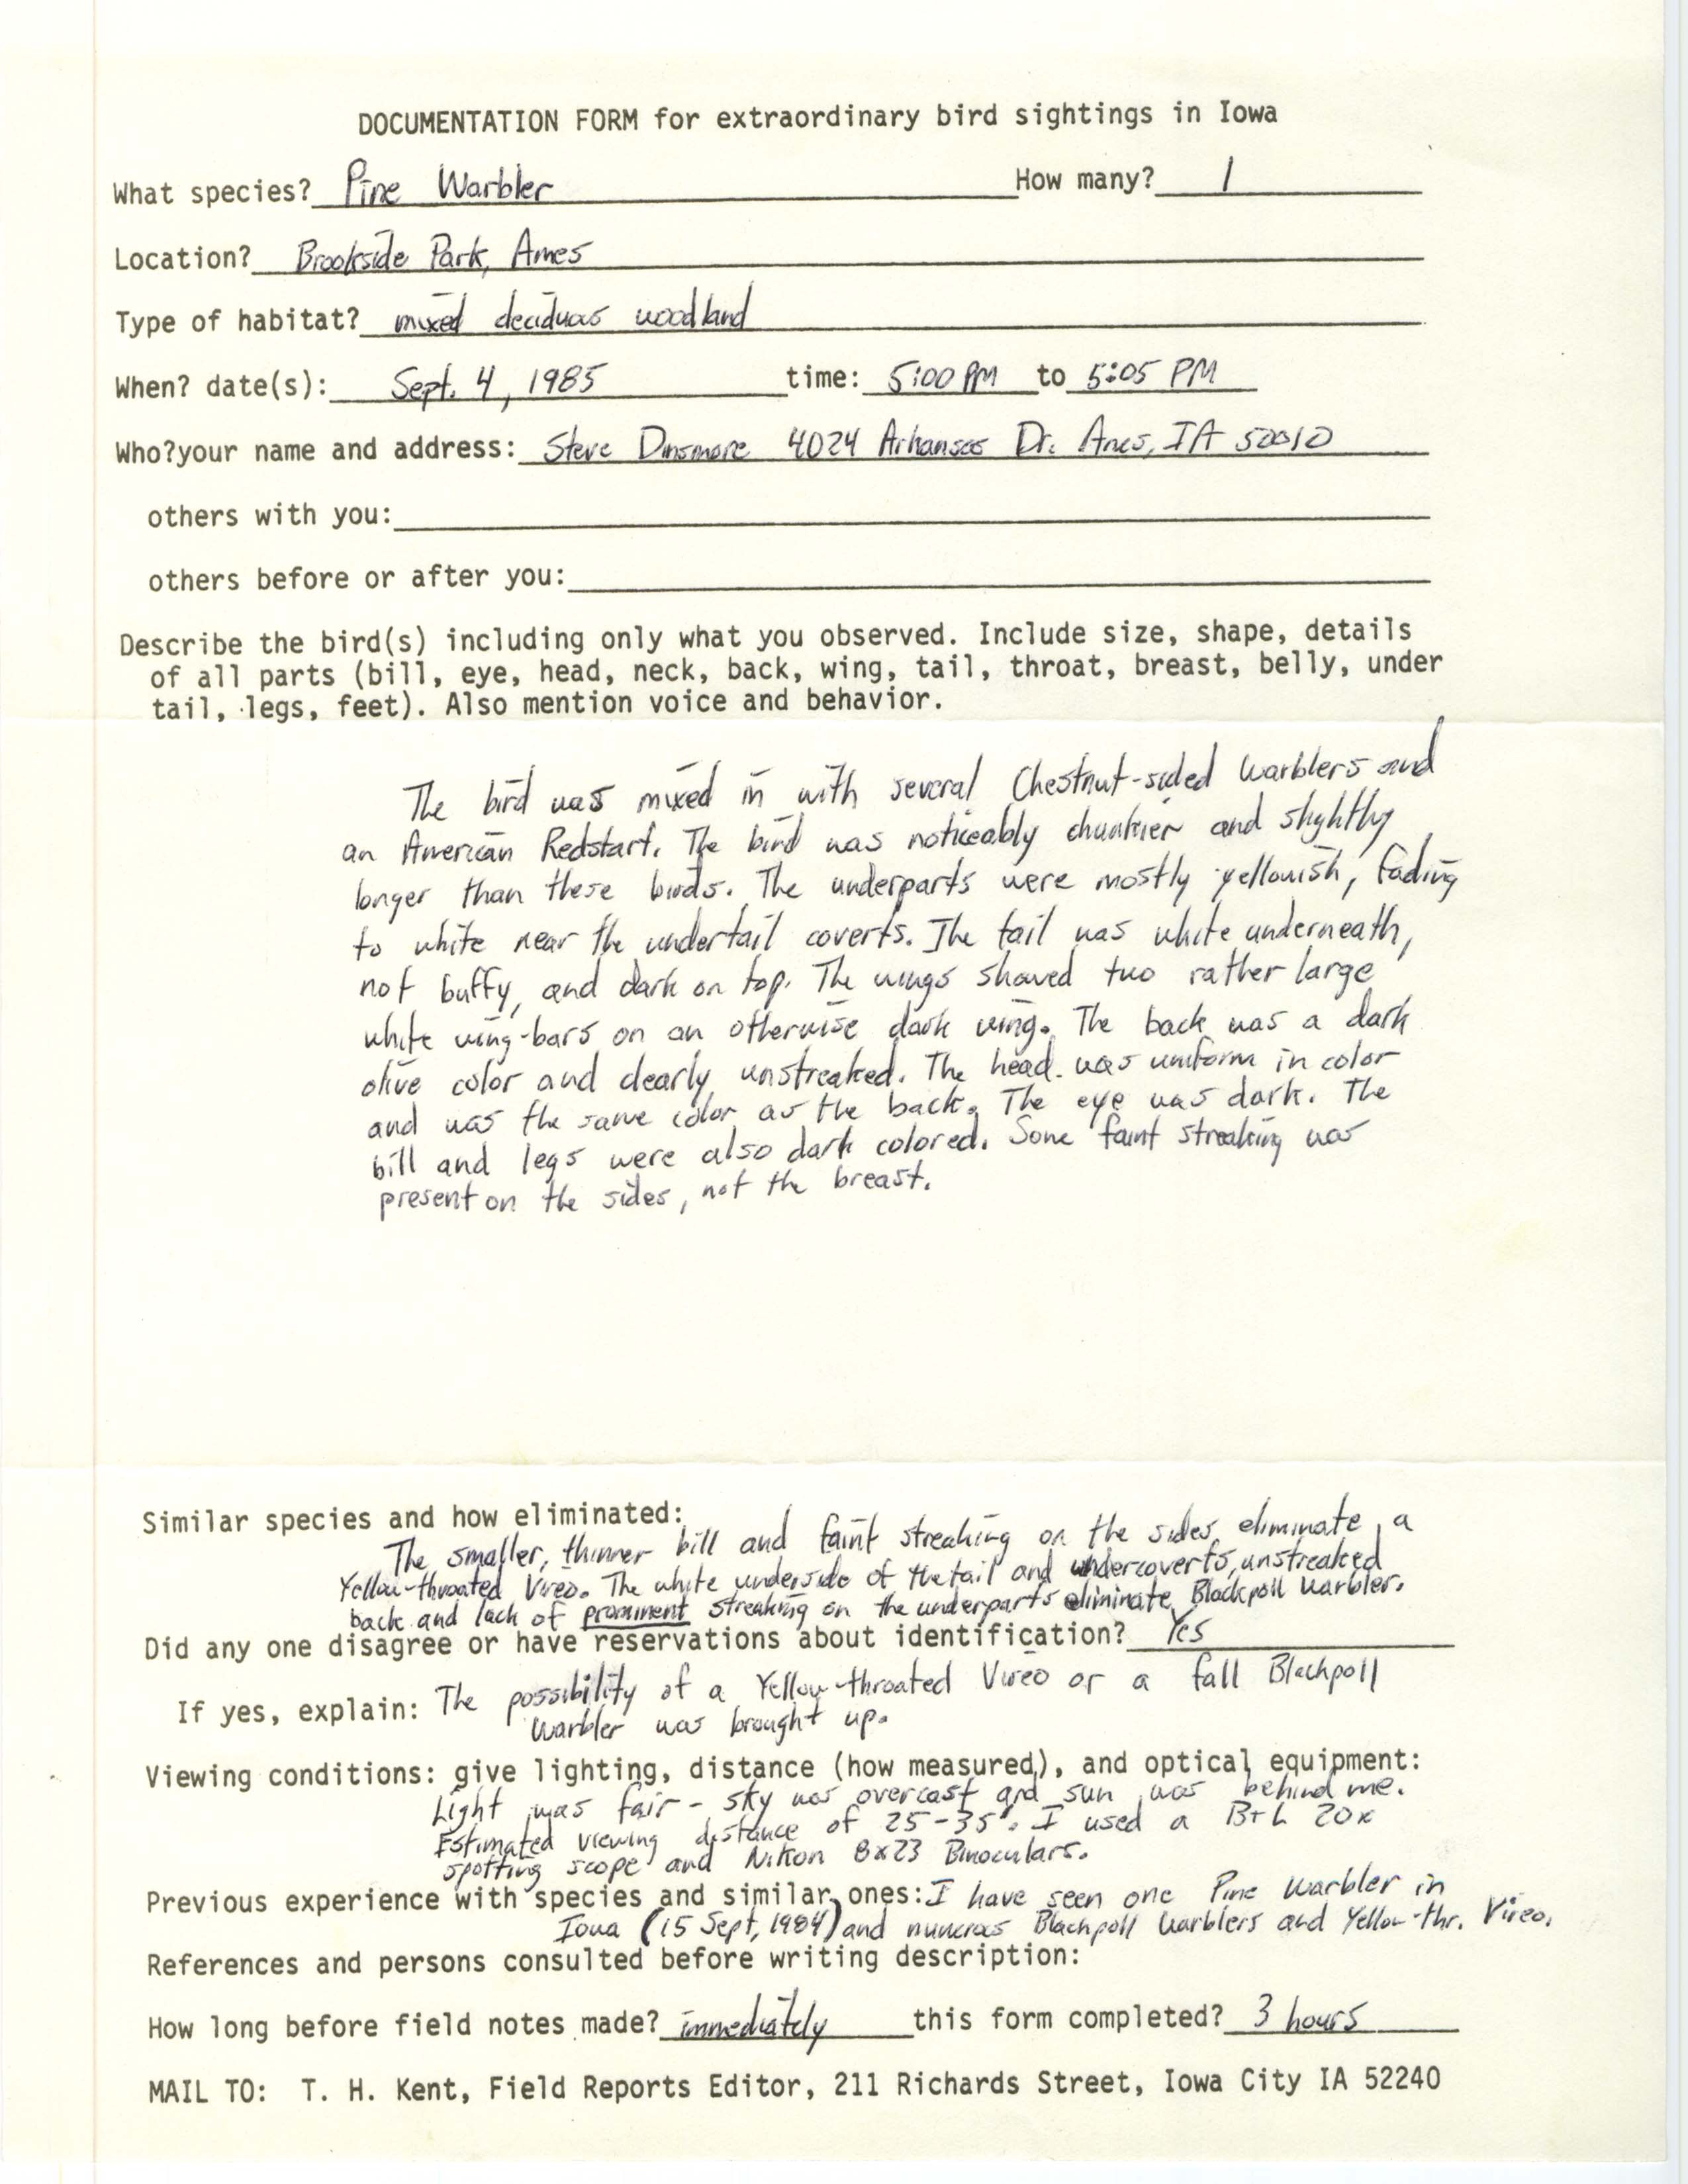 Rare bird documentation form for Pine Warbler at Brookside Park in Ames, 1985